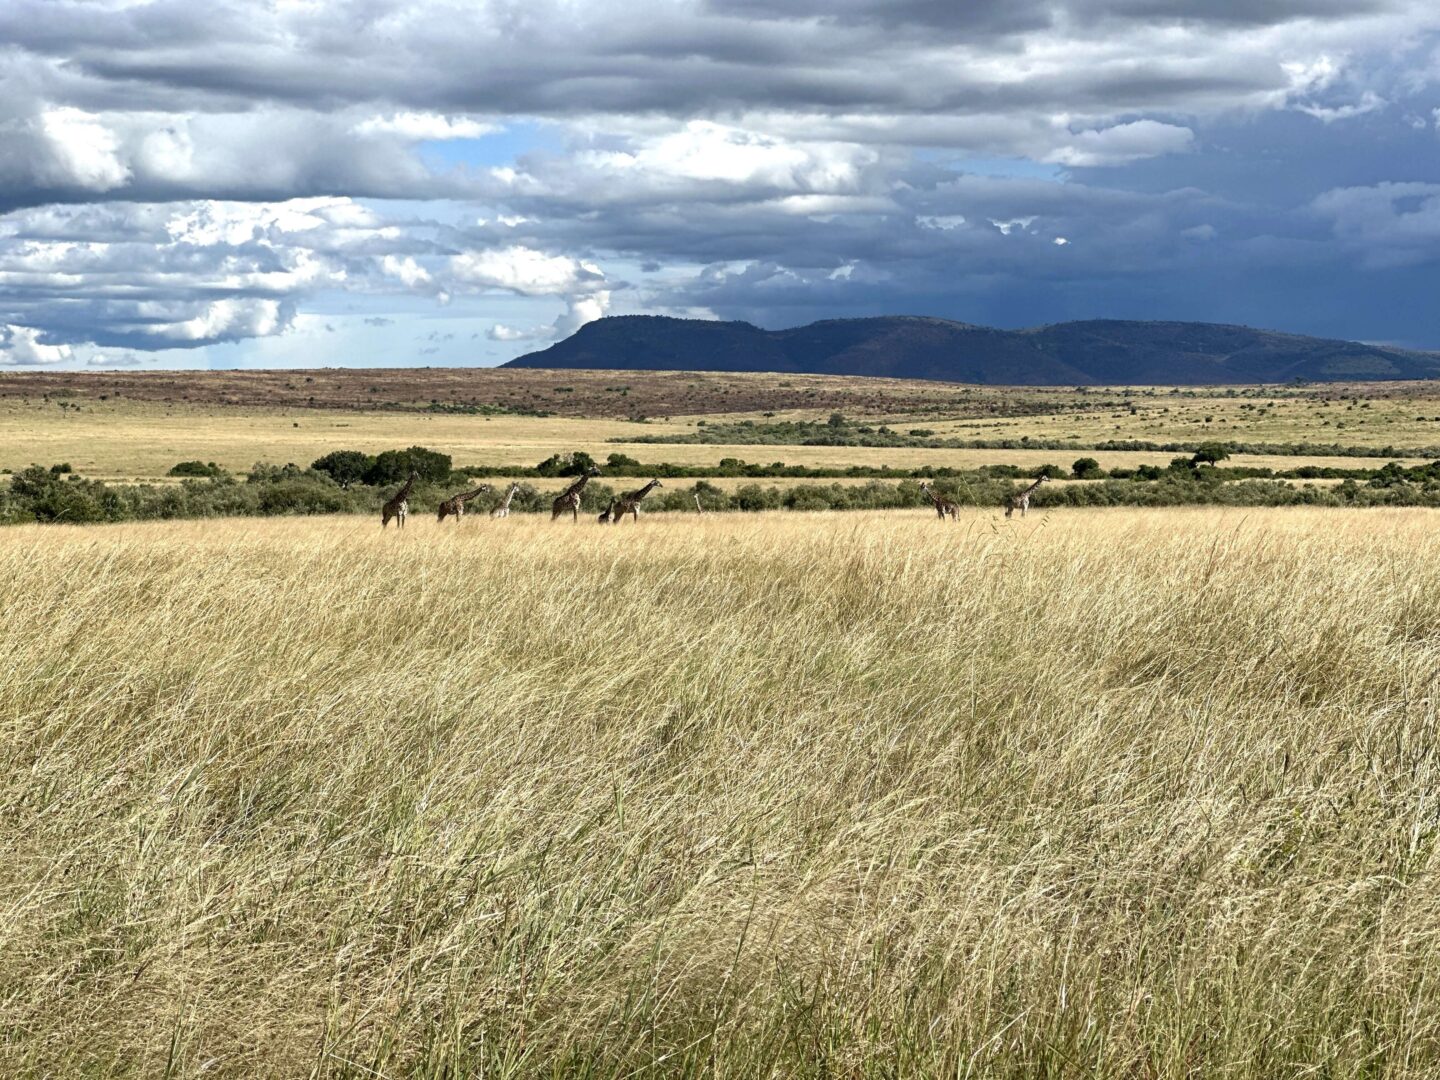 A family of giraffes walking across the Maasai Mara.